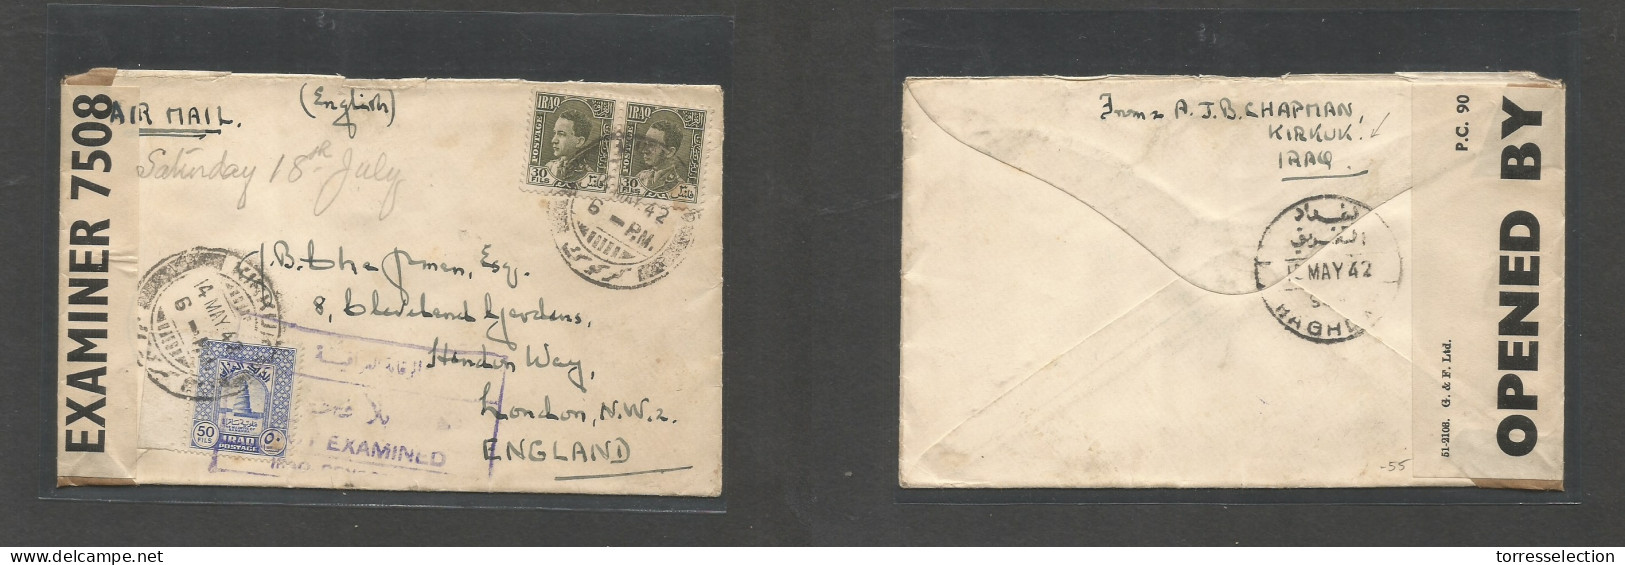 IRAQ. 1942 (14 May) Kirkuk - England, London WWII Multifkd Env At 110 Fils, Rate. Airmail Censored At Origin And Destina - Iraq